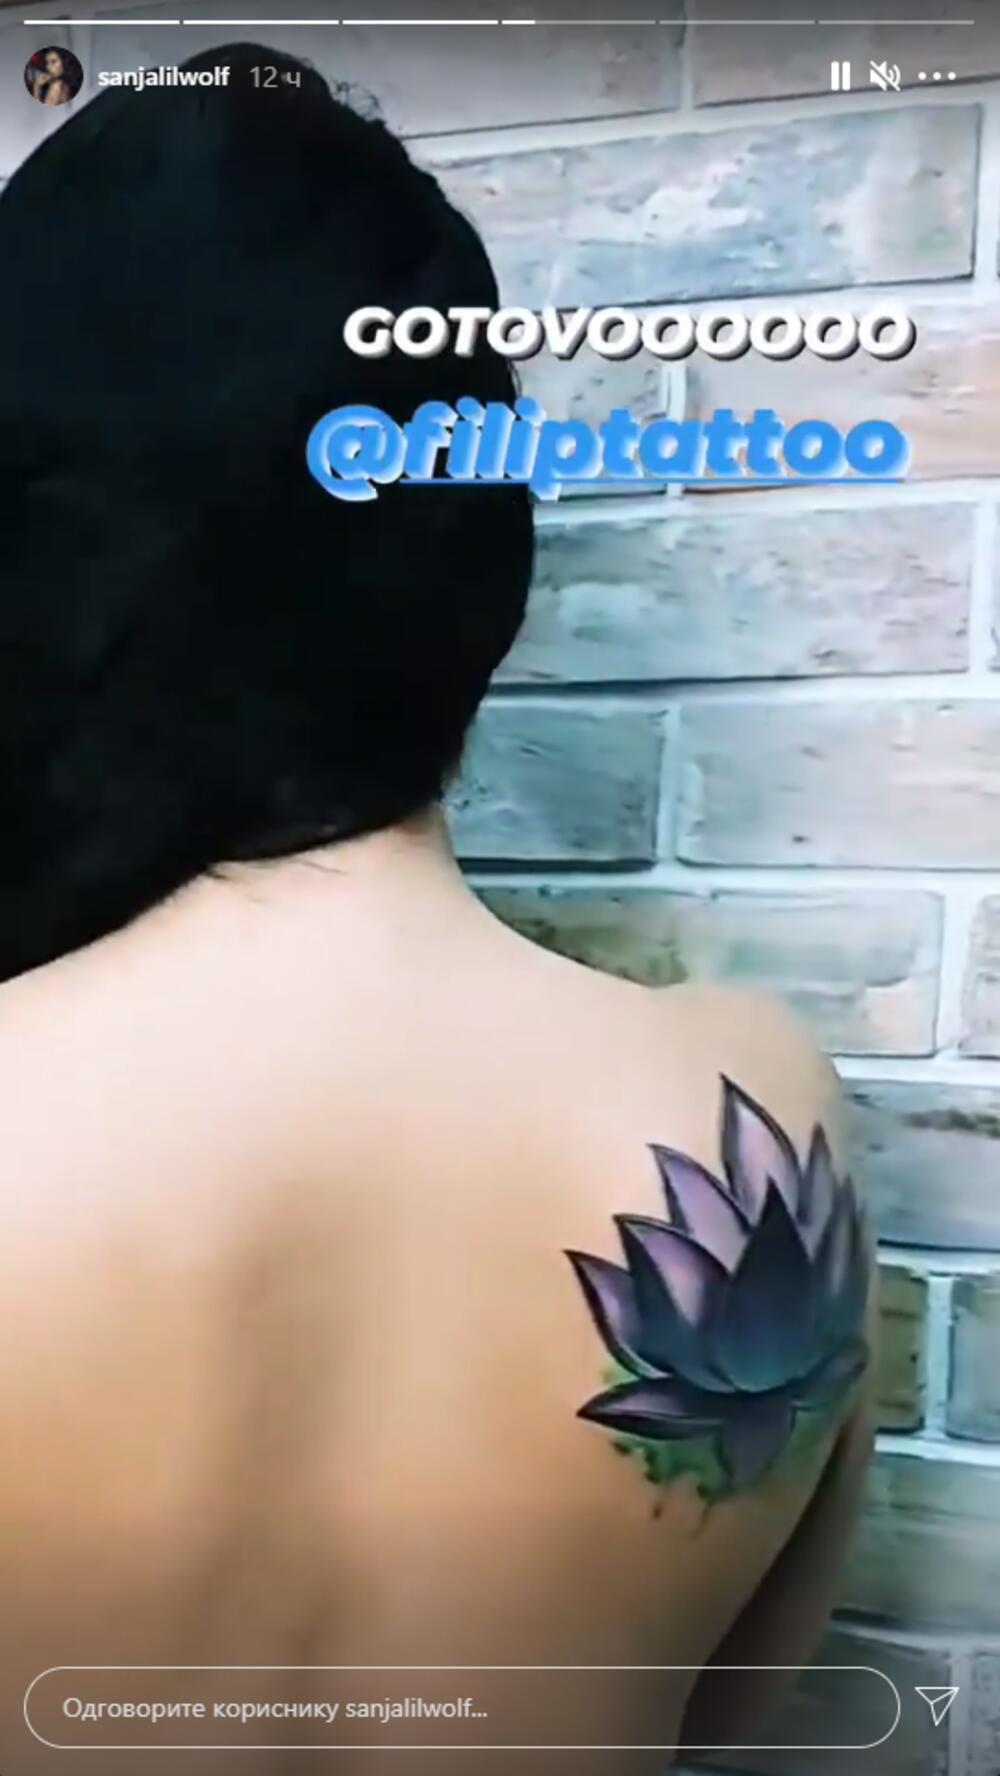 <p><br />
Članica grupe Hurricane pohvalila se na Instagramu da je ponovo oslikala svoje telo</p>